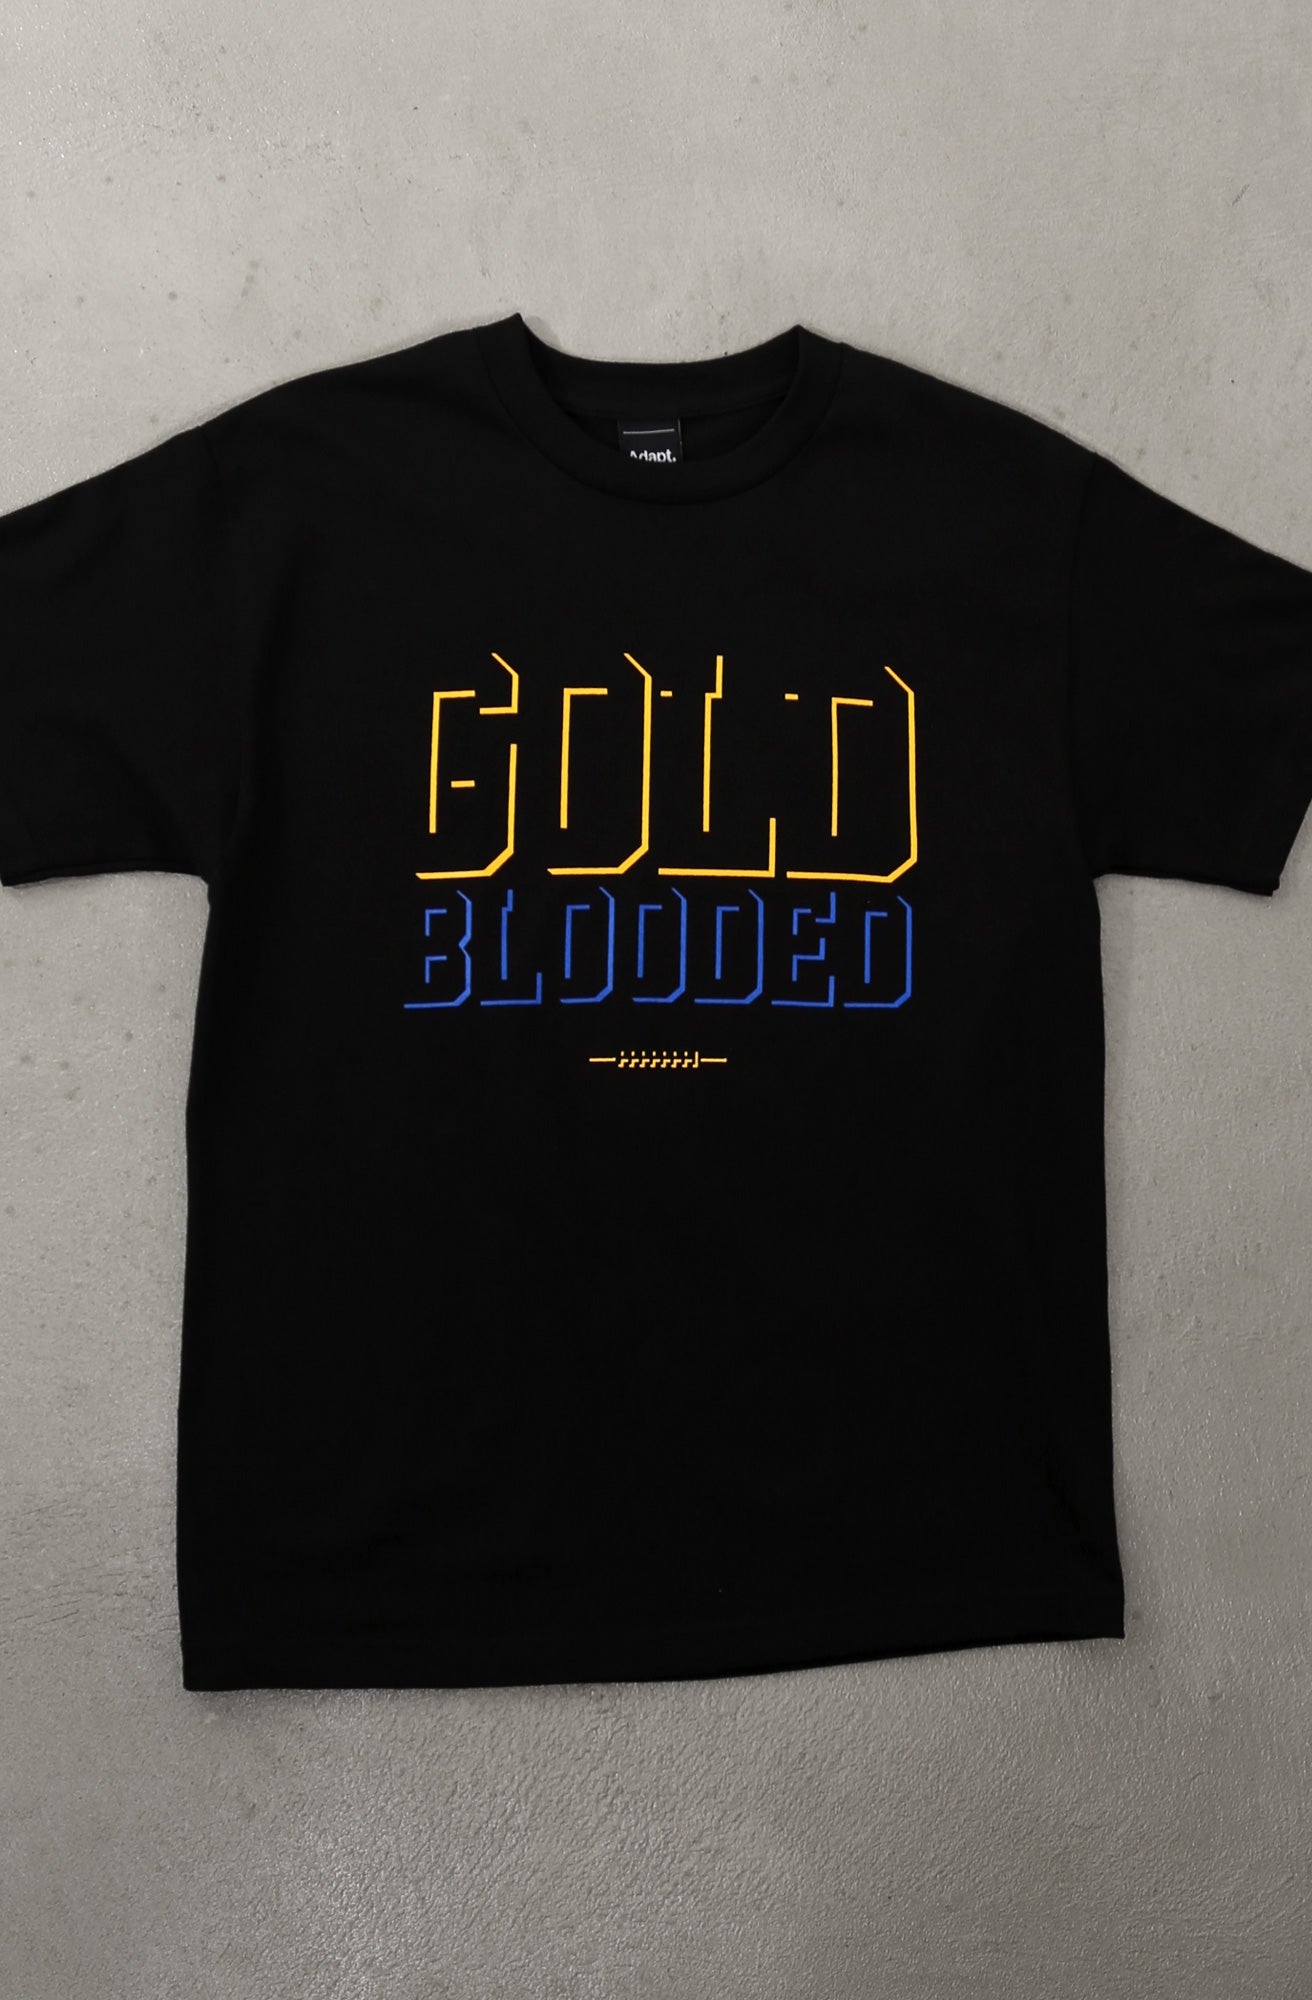 Gold Blooded Eclipse (Men's Black/Royal Tee)